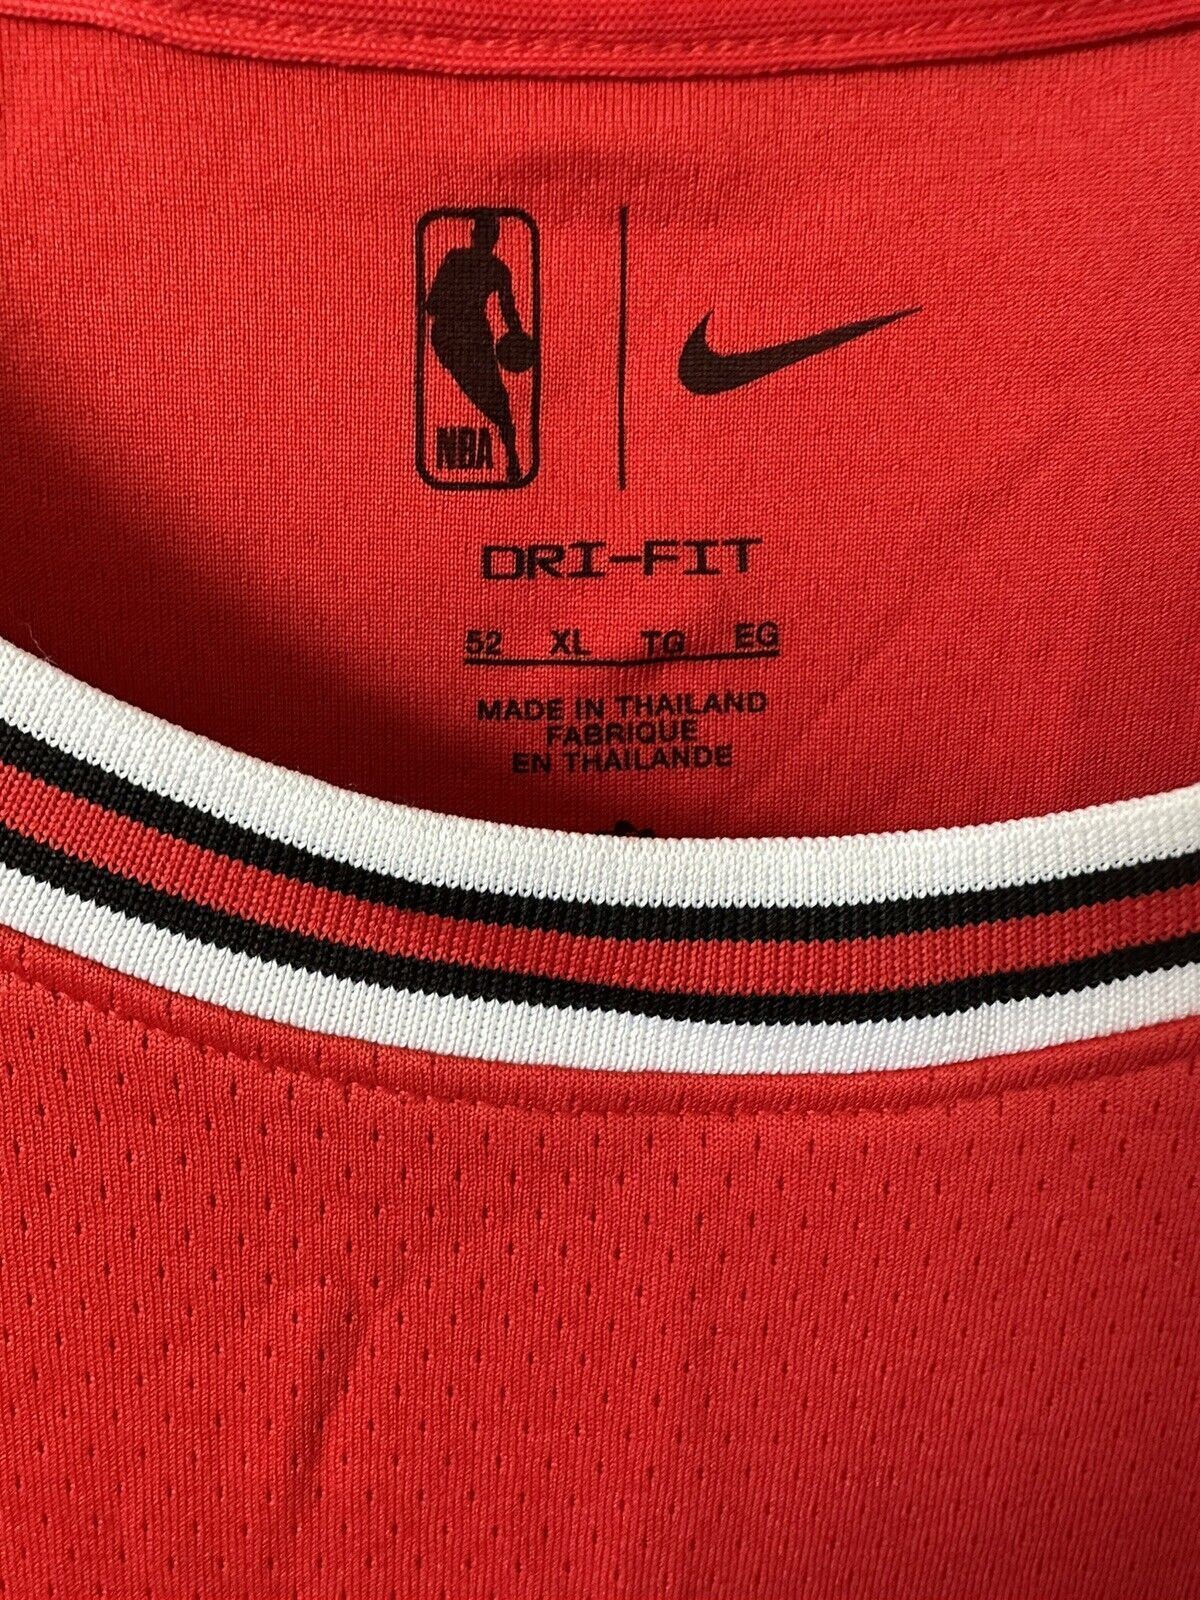 Nike NBA Chicago Bulls Icon Edition Jersey GARES 14 Basketball Mens XL